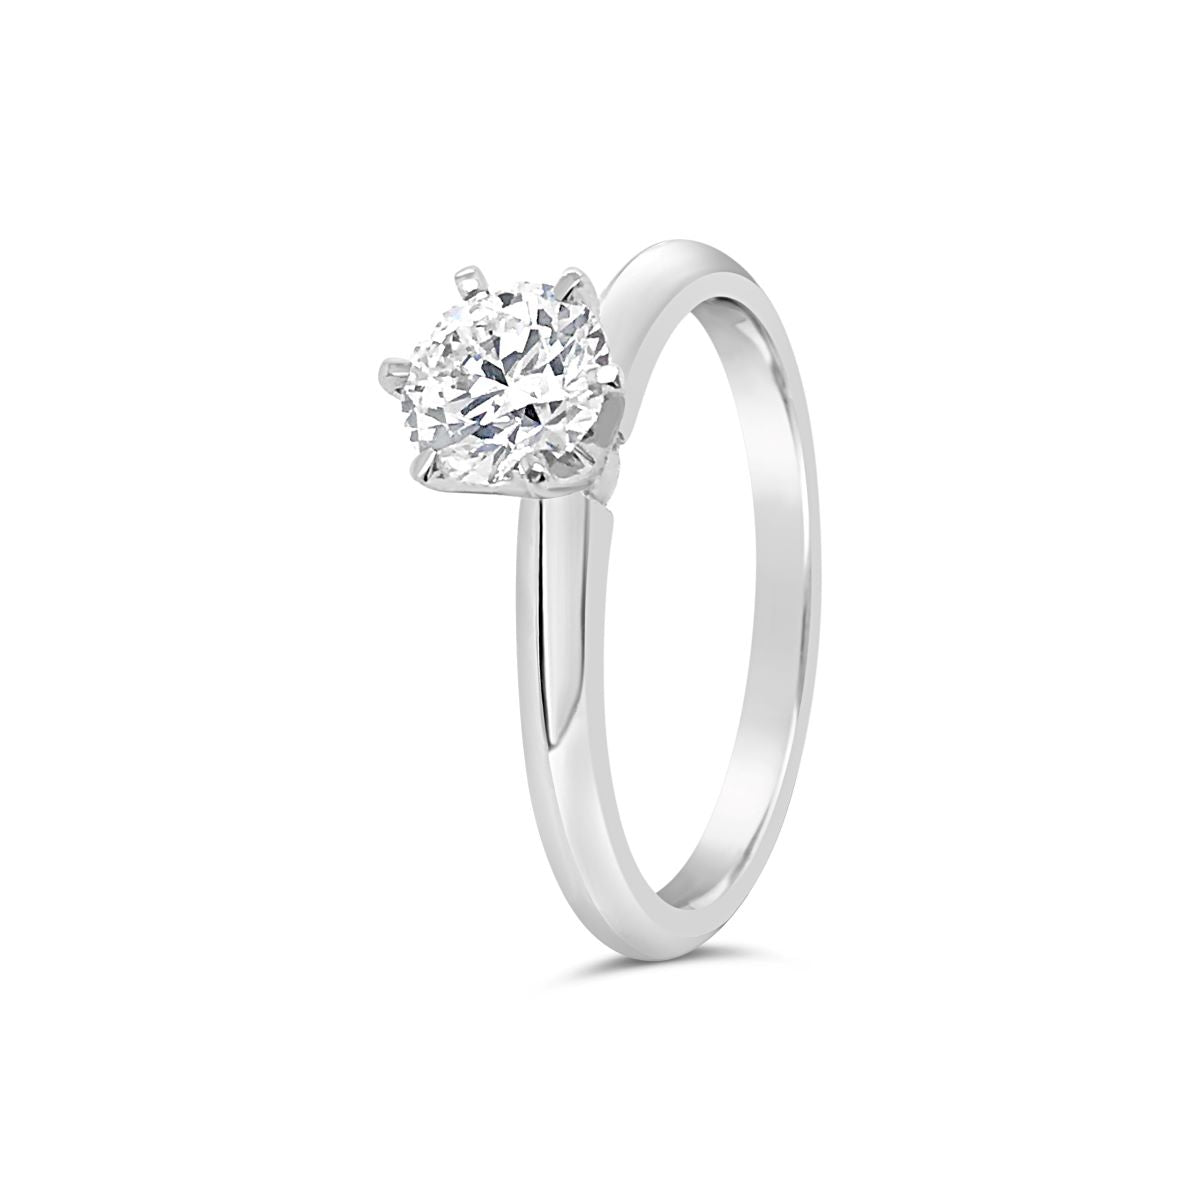 Trewarne diamond engagement ring